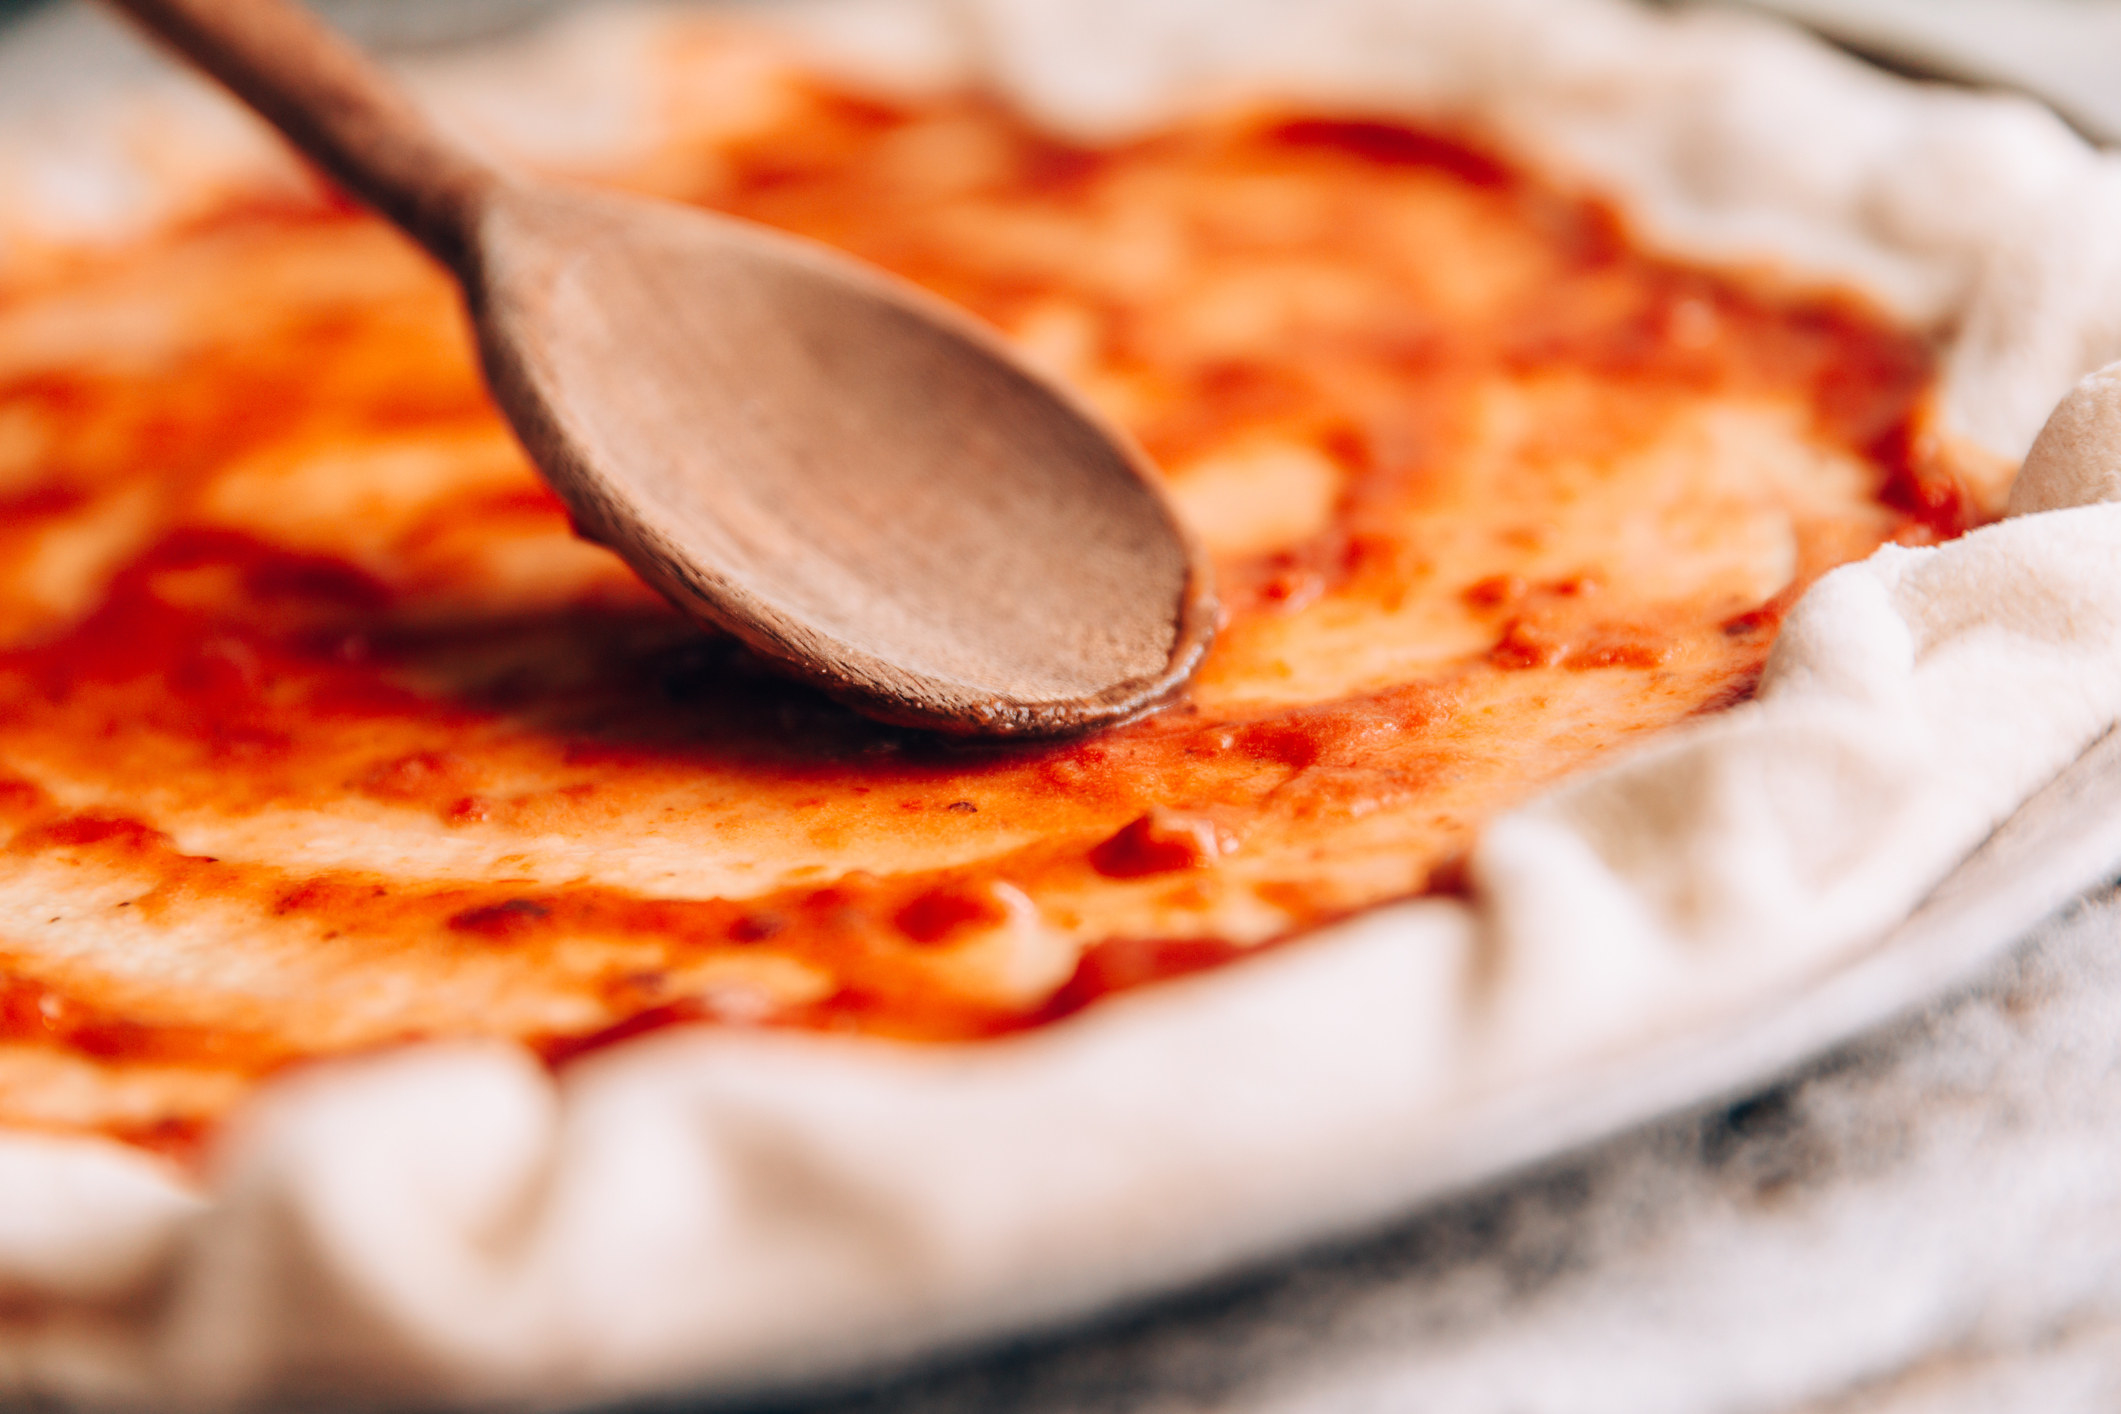 spoon spreading sauce over pizza dough